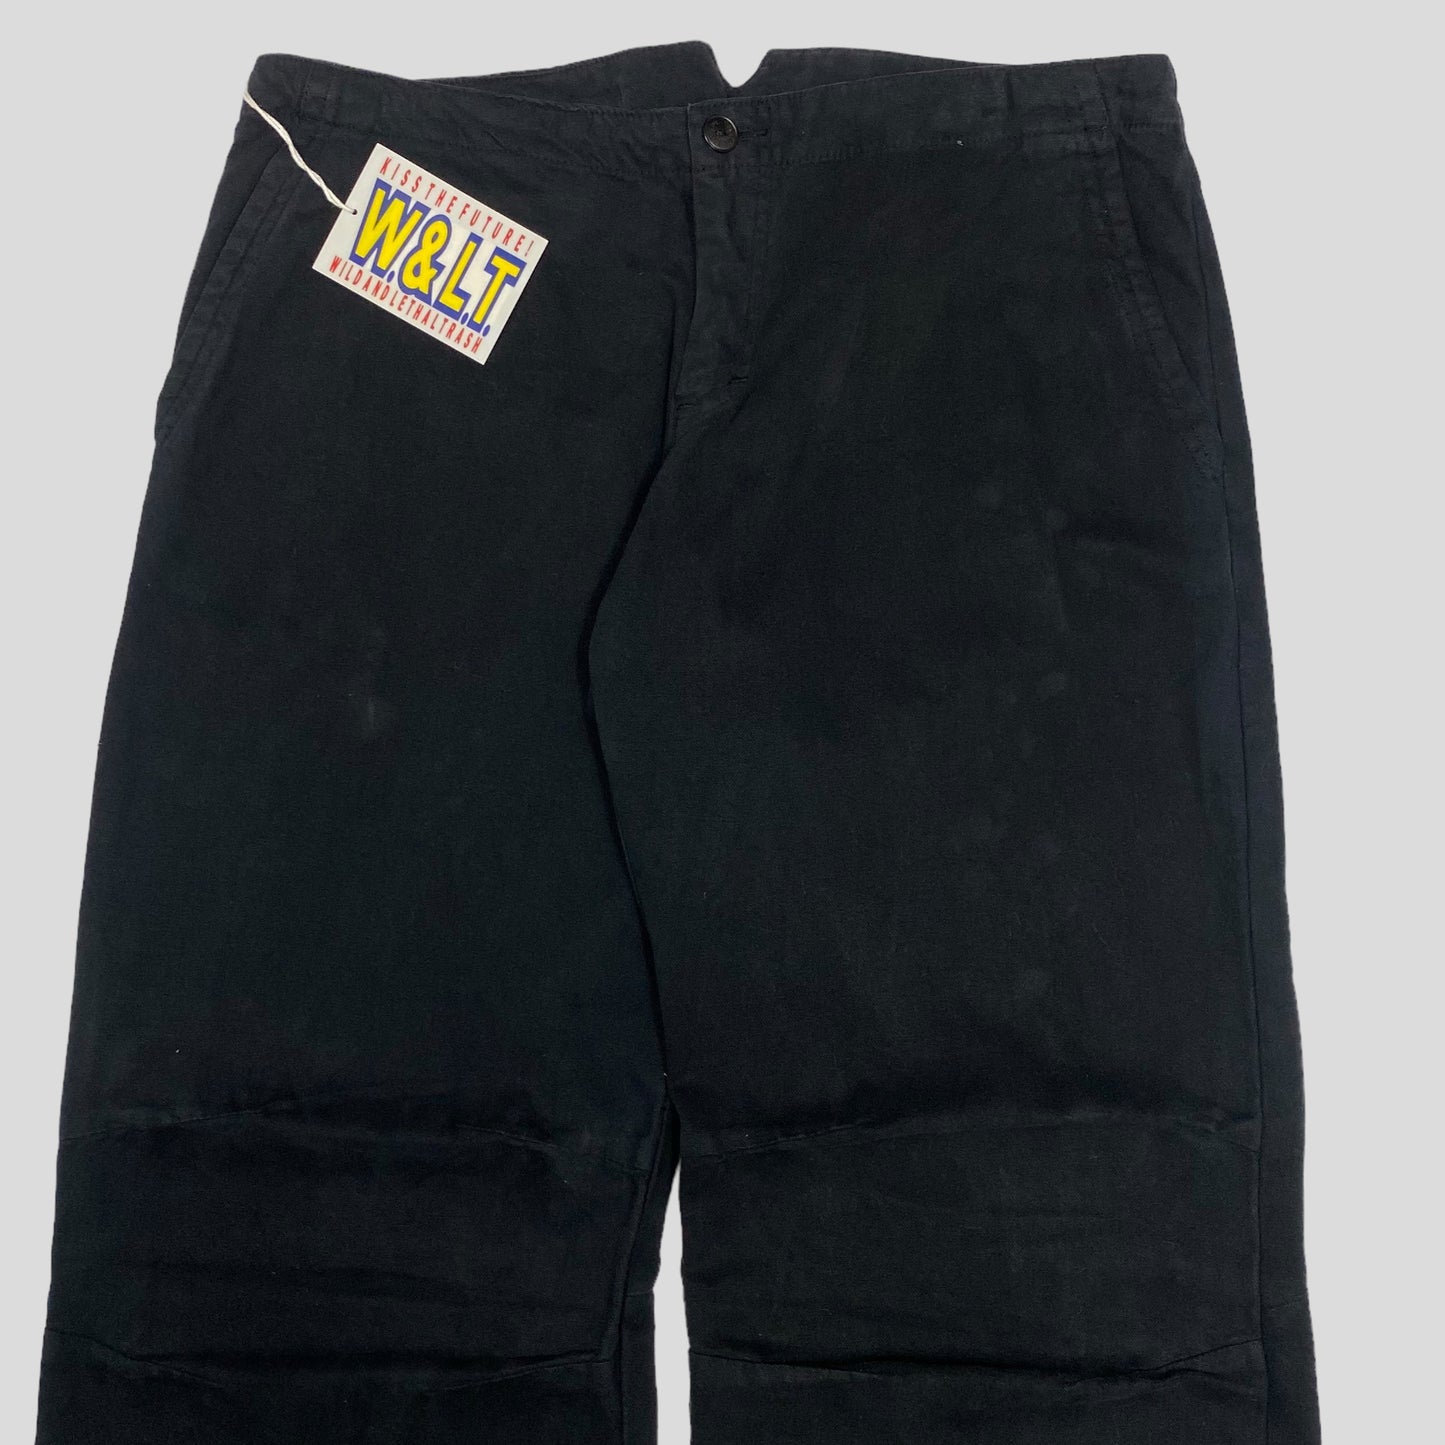 W+LT 2003 Baggy Puk Puk Trousers - 32-35